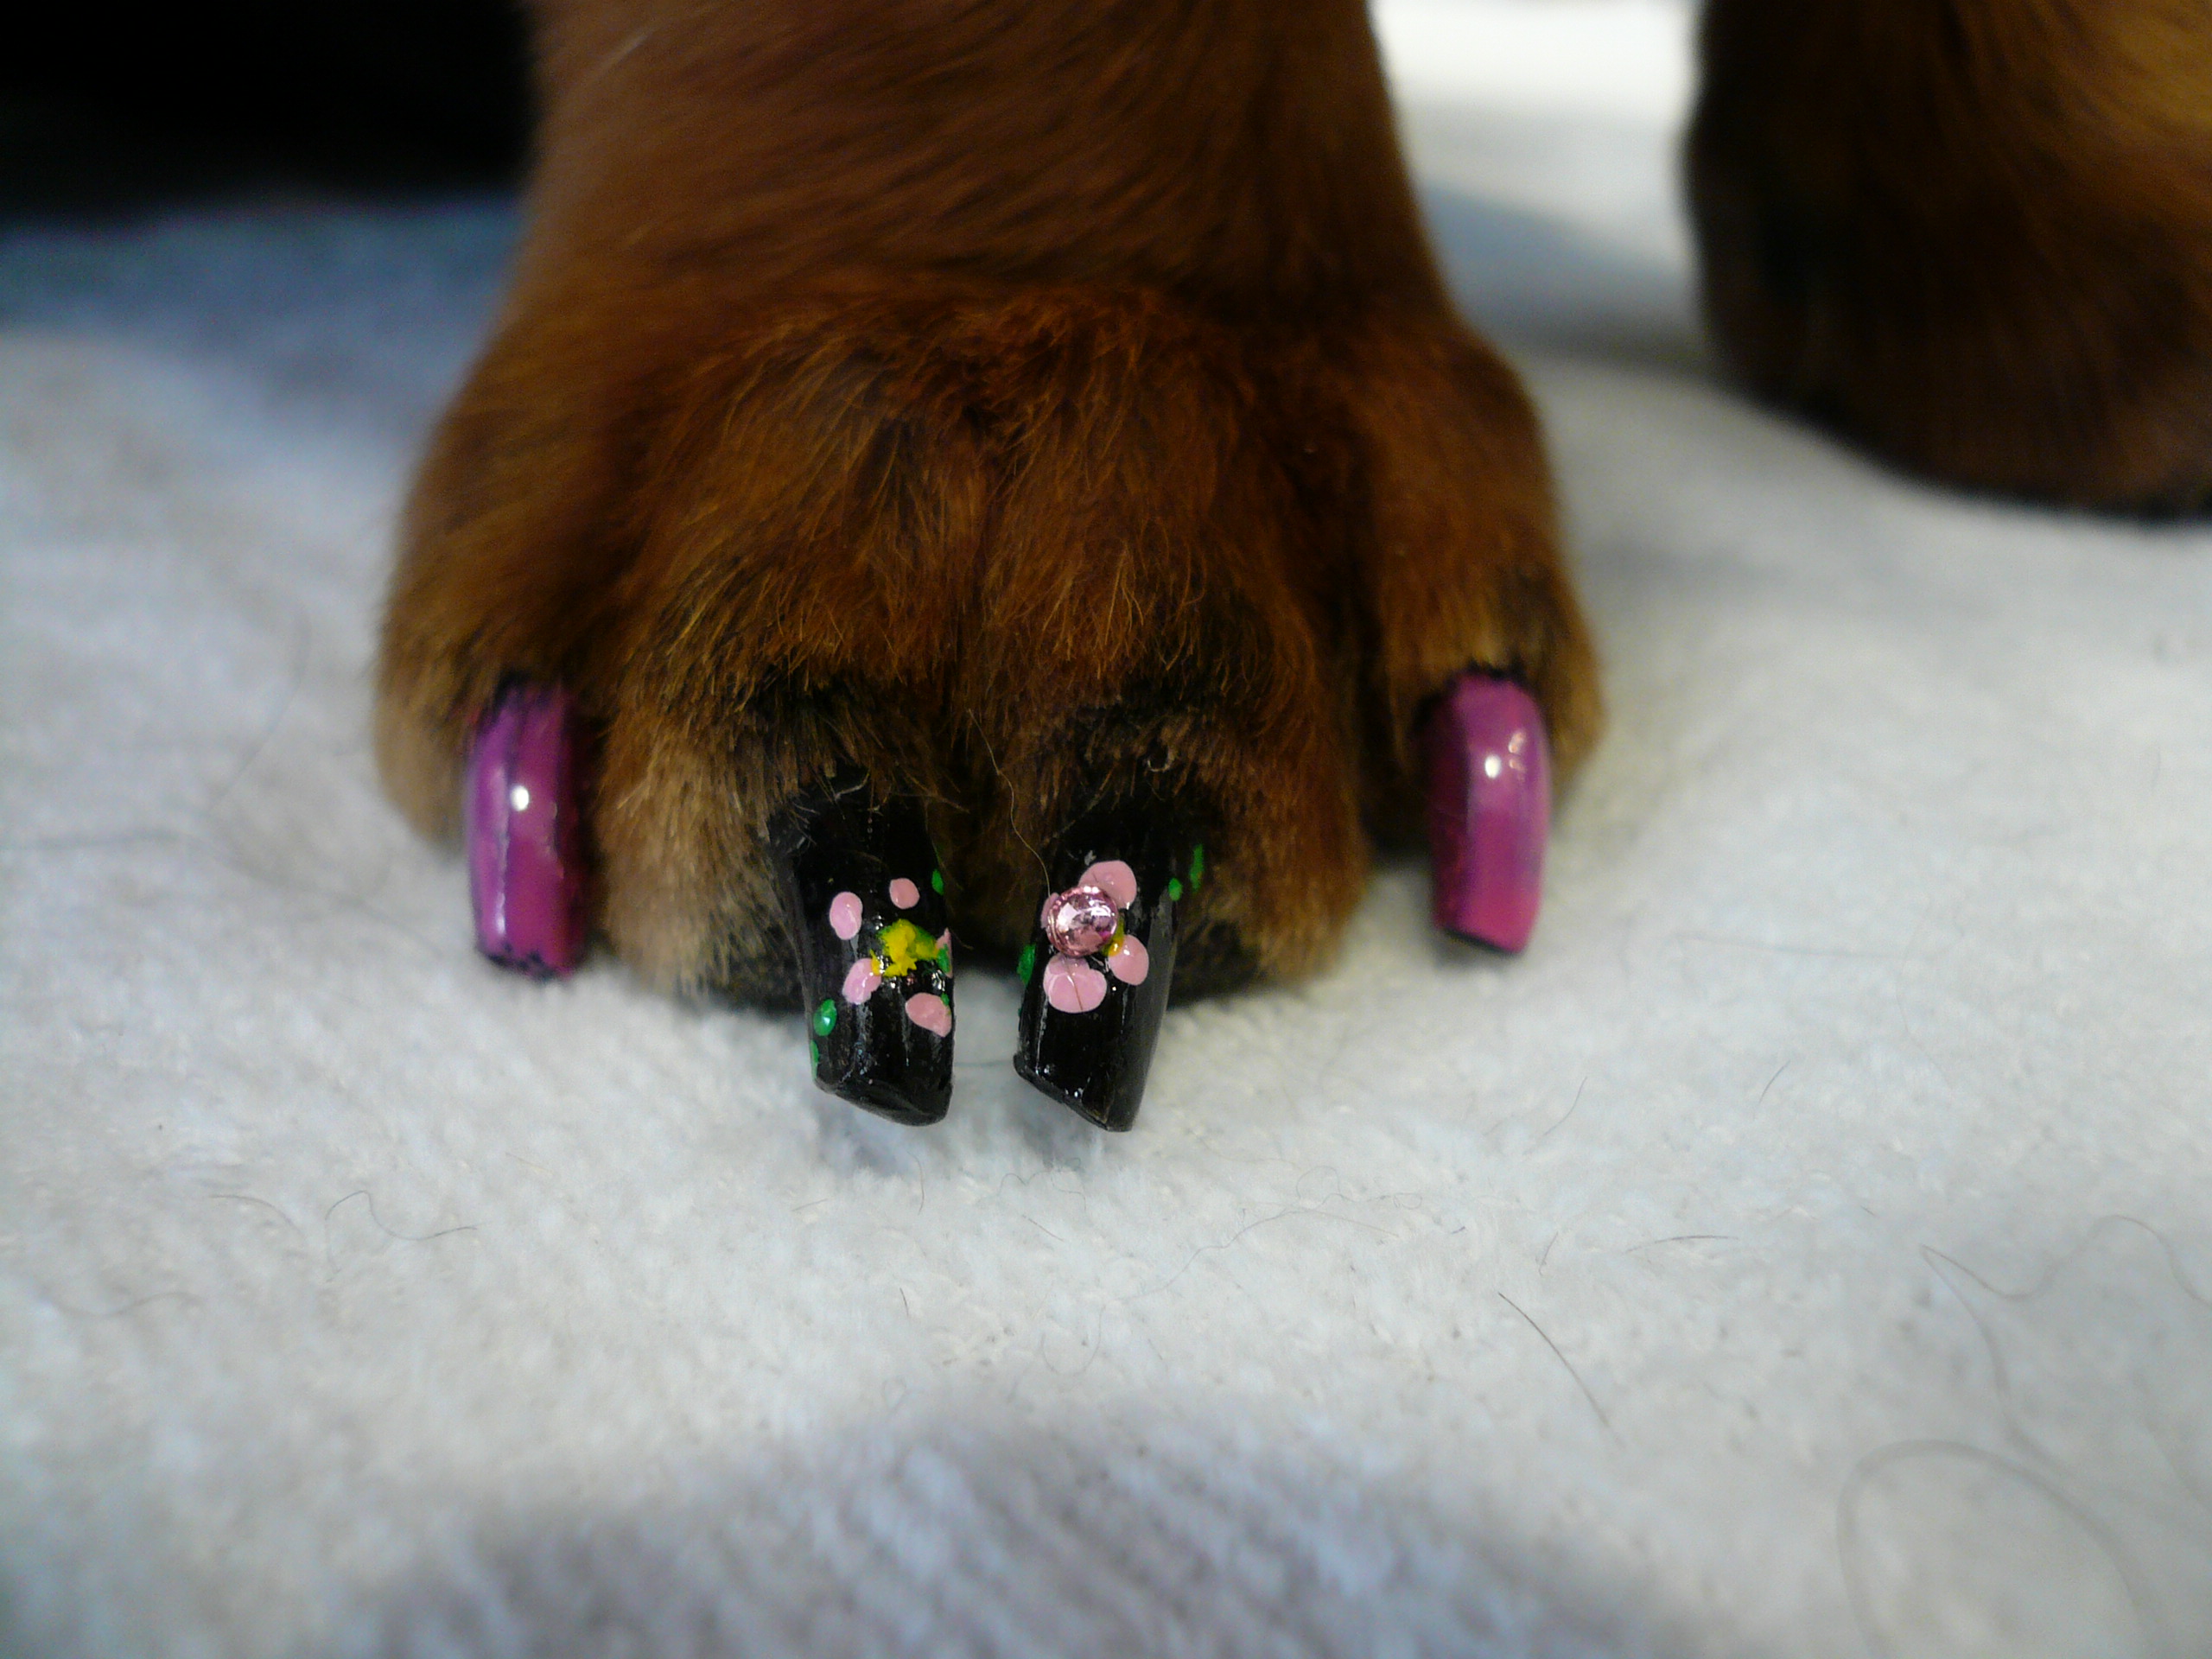 dog nail polish